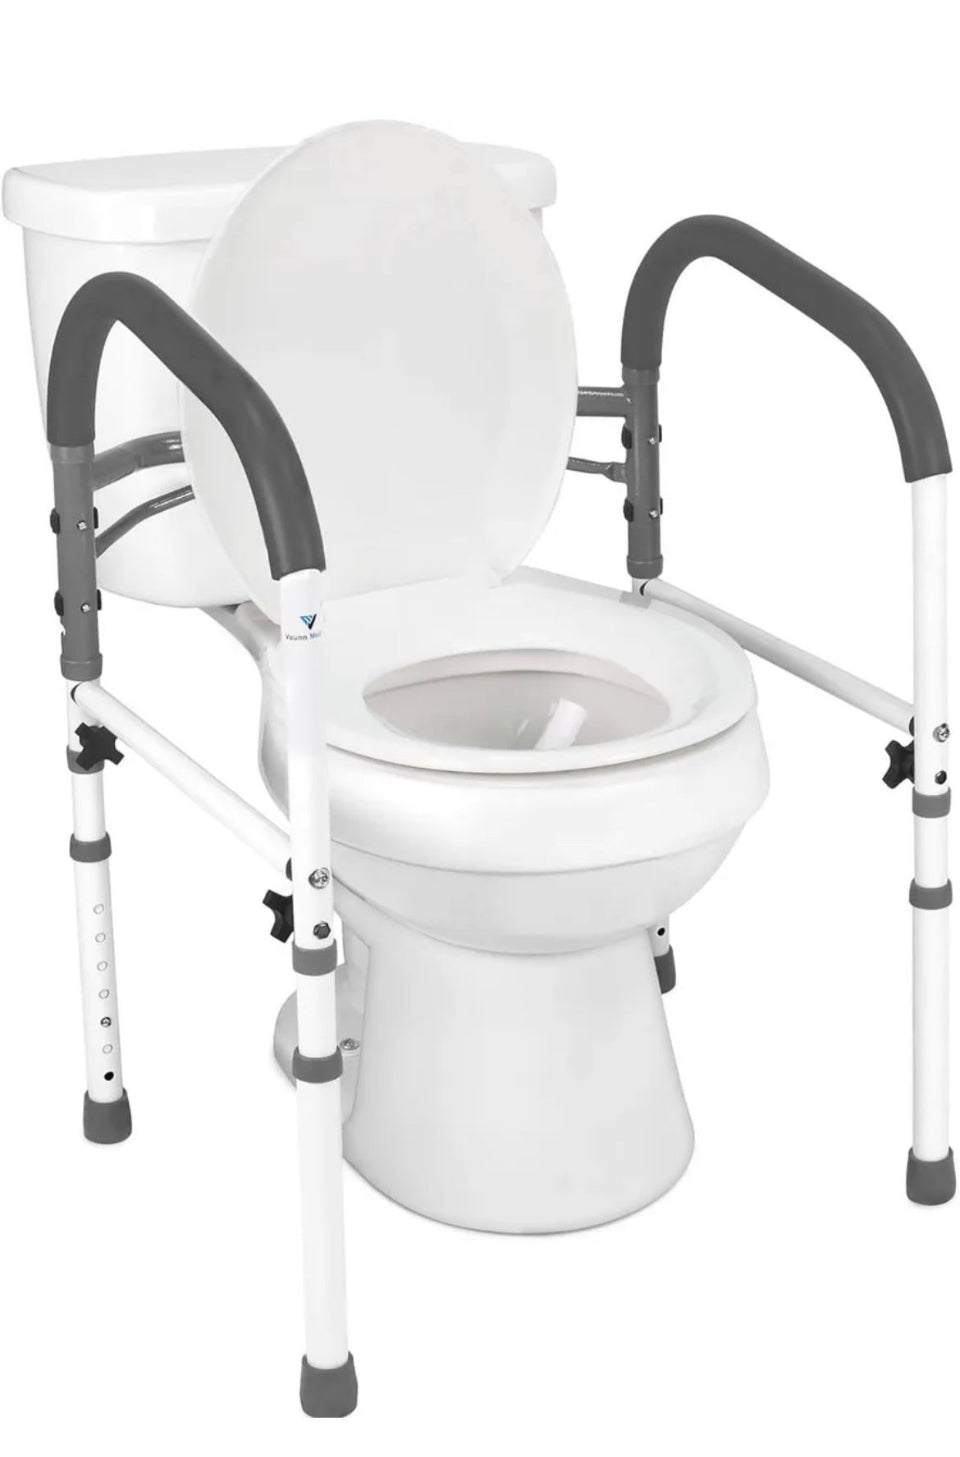 Vaunn Deluxe Folding Safety Toilet Rail, Adjustable and Foldable Toilet Safety Frame, Bathroom Handrail Assist Grab Bar Handle, Gray - Selzalot